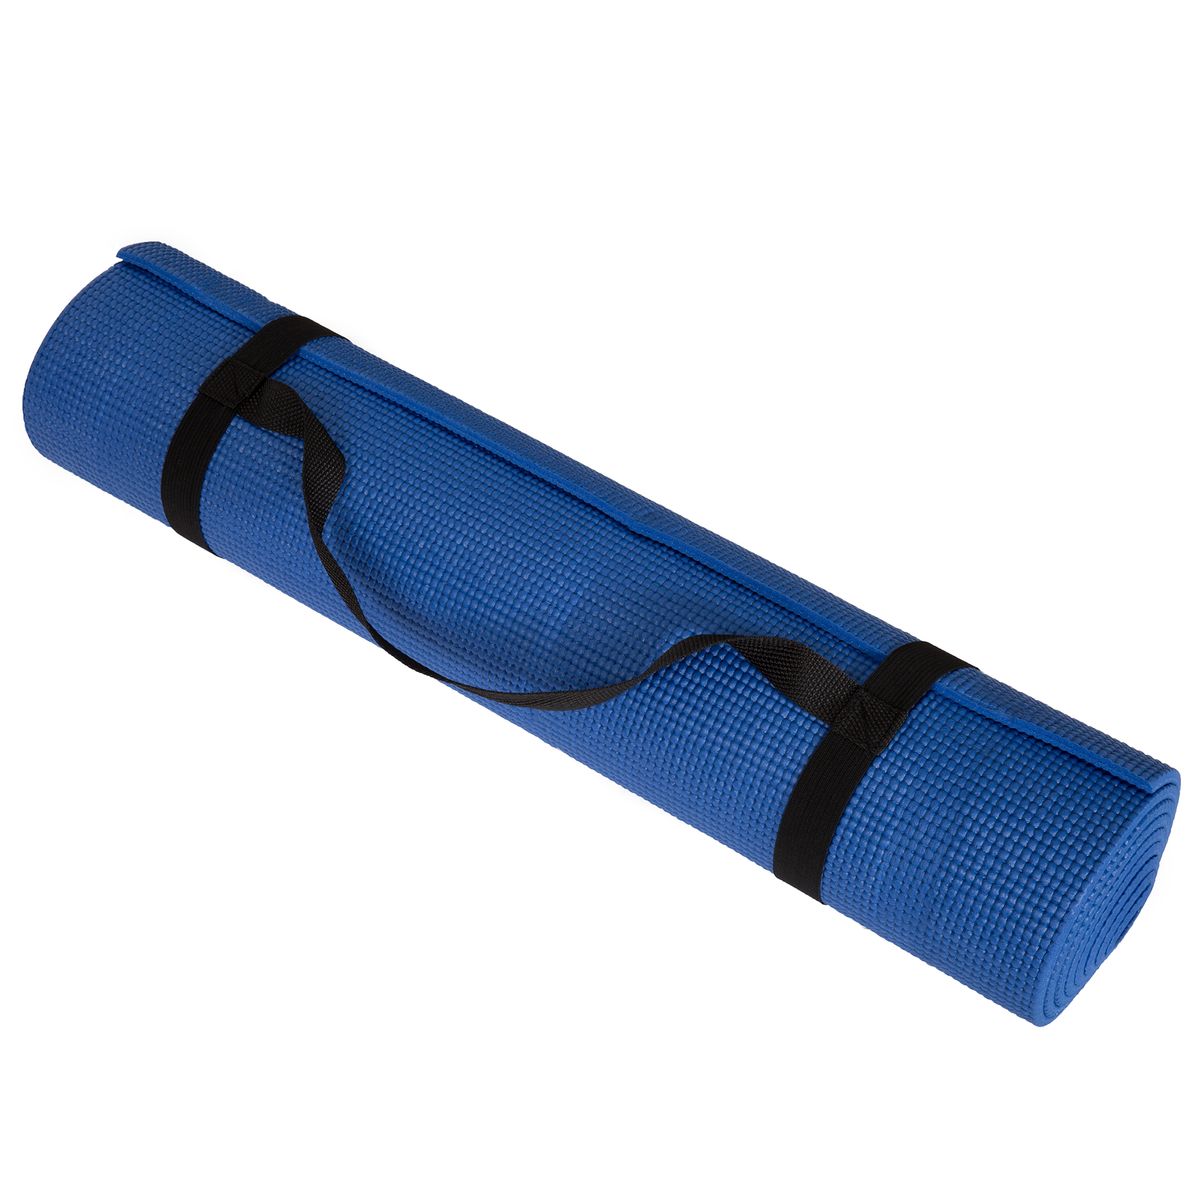 [RDY] [送料無料] Wakeman フィットネス用両面ヨガマット 1/4インチ ブルー [楽天海外通販] | Wakeman Fitness Double Sided Yoga Mat, 1/4 In., Blue